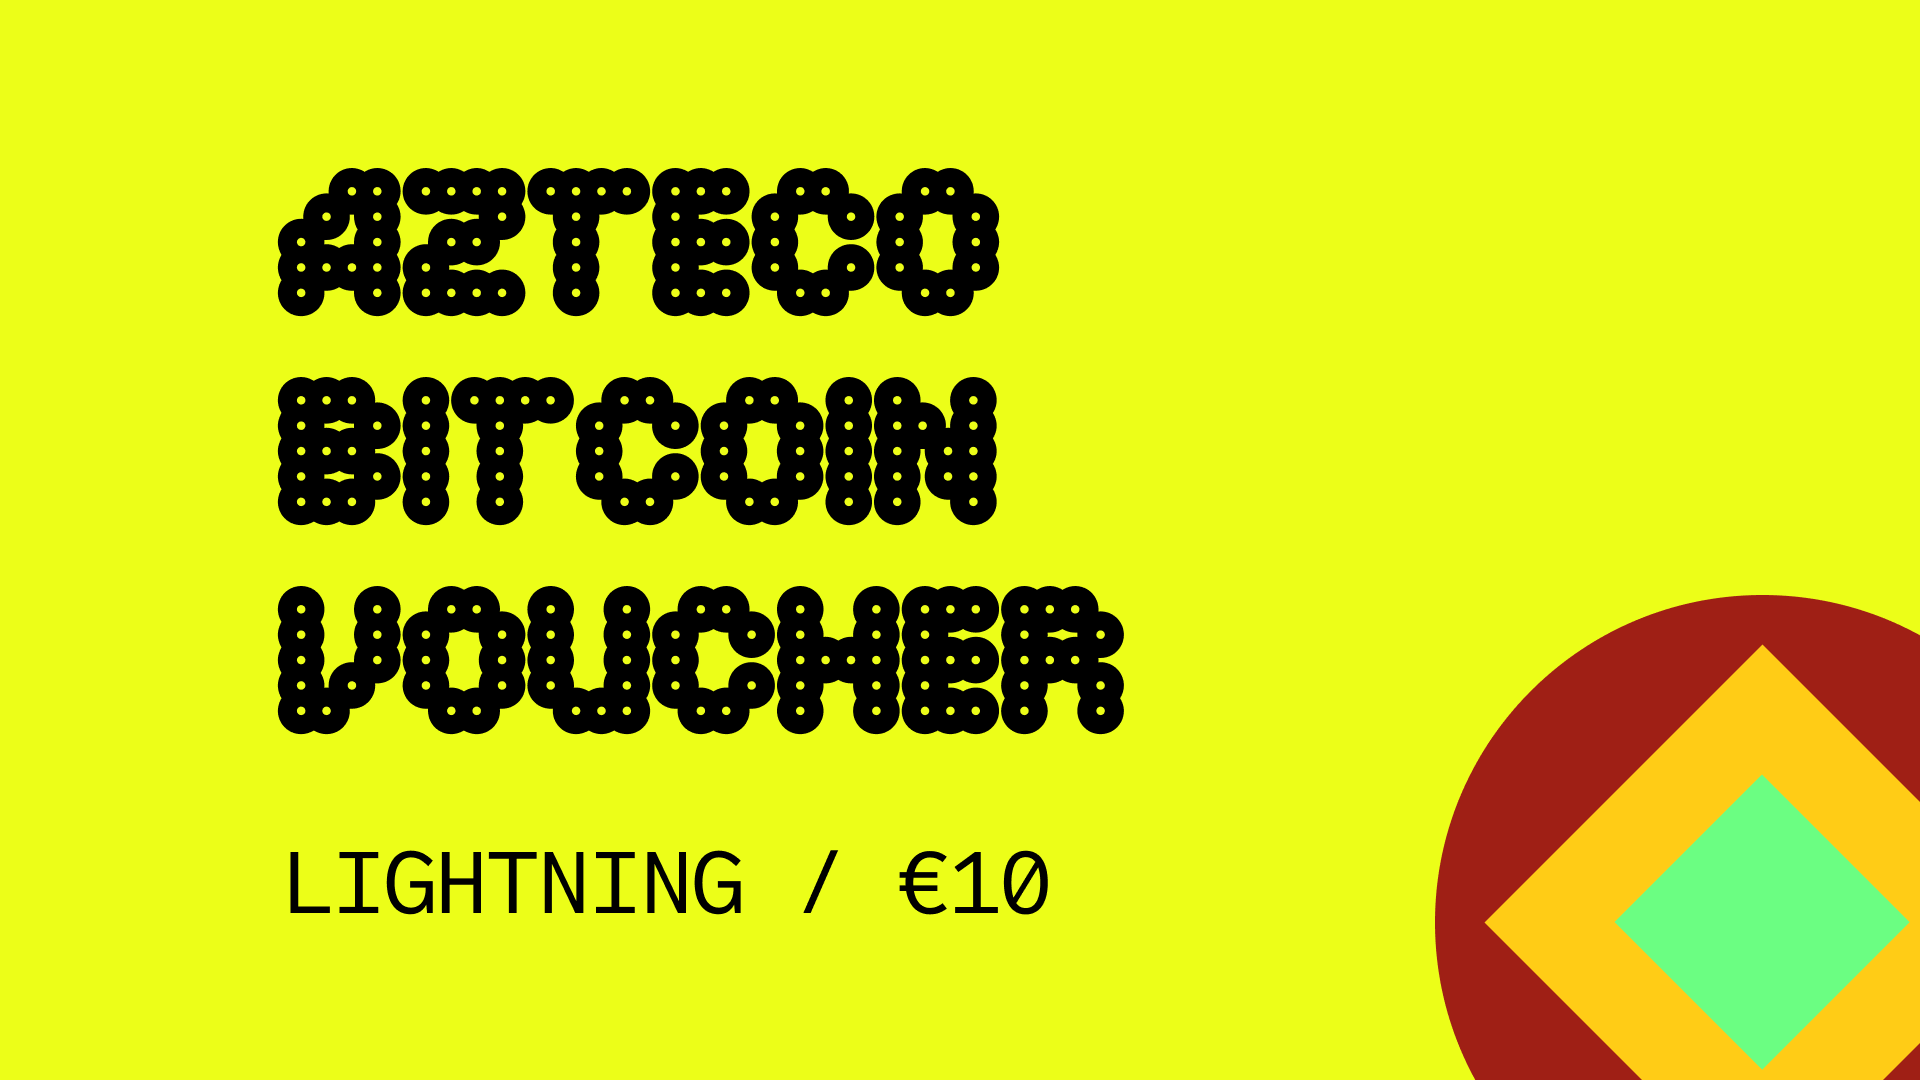 Azteco Bitcoin Lighting €10 Voucher 11.3 usd